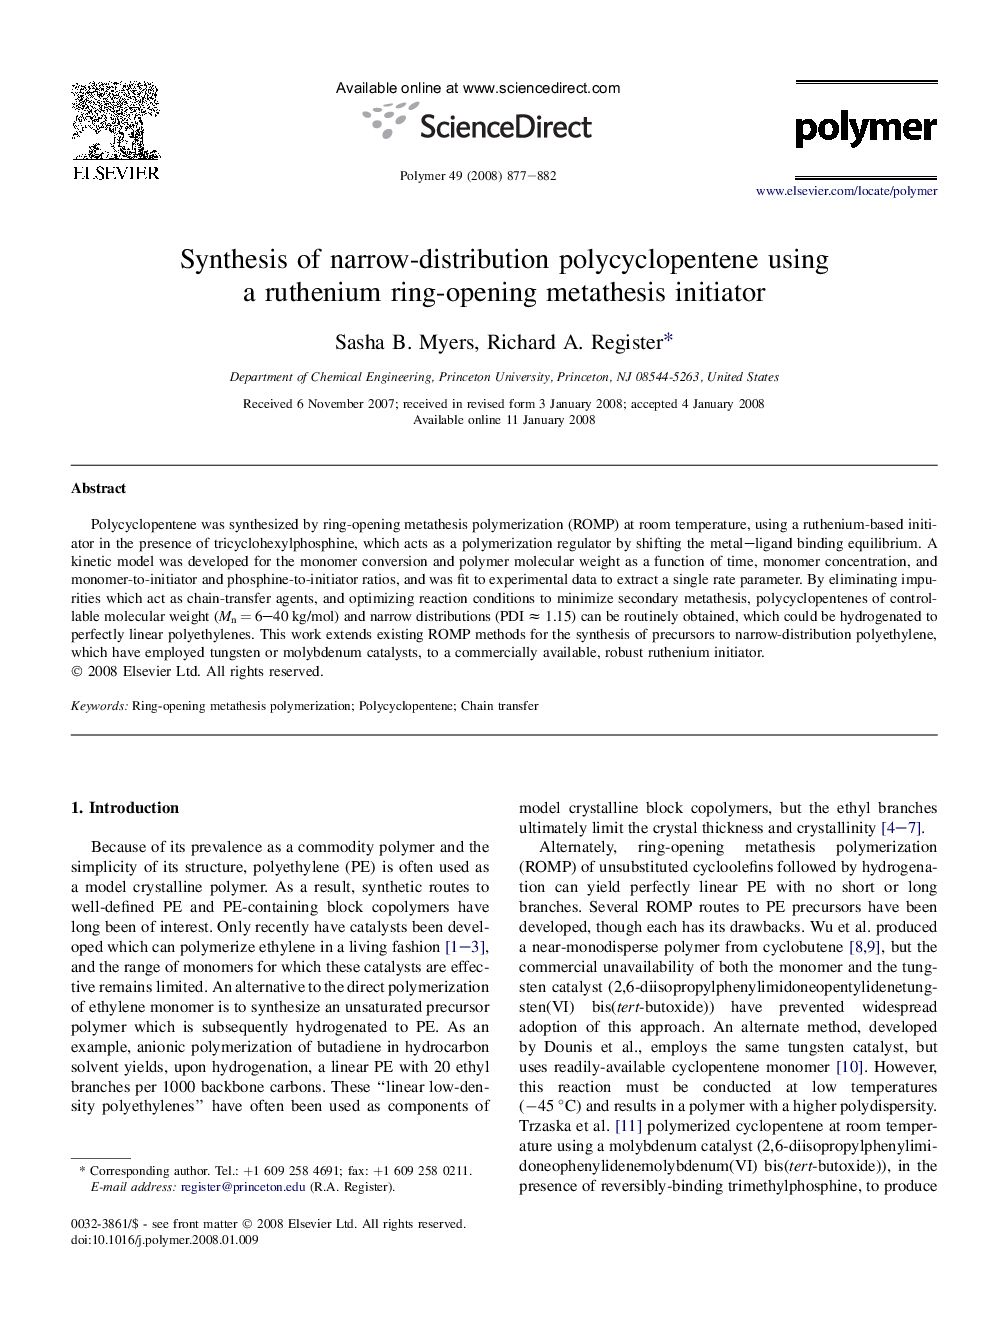 Synthesis of narrow-distribution polycyclopentene using a ruthenium ring-opening metathesis initiator